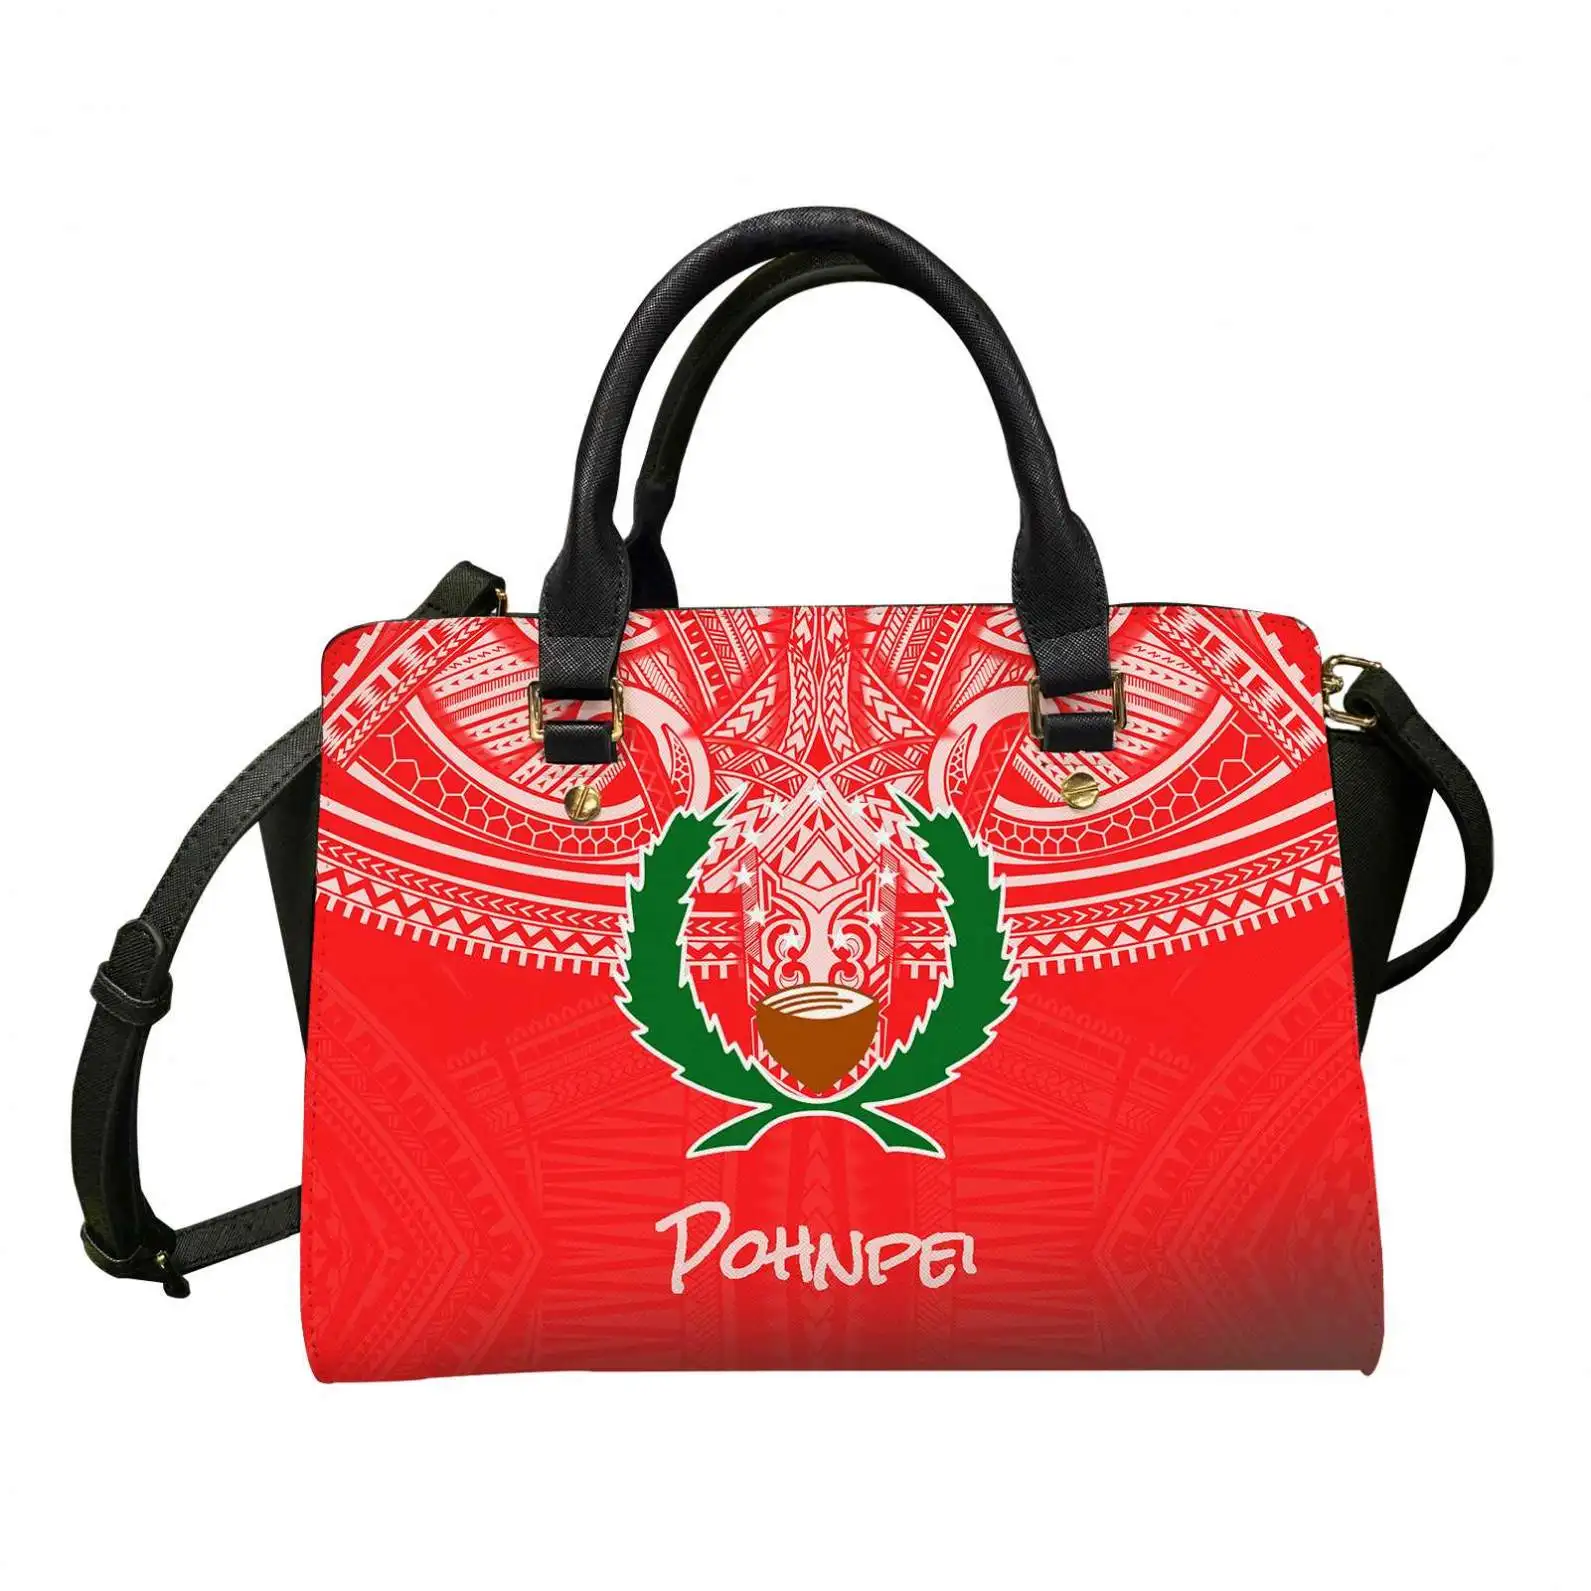 

Pohnpei Polynesian Unique Handbags for Women Red Tribal Wave Leather Purses Crossbody Top Handle Shoulder Bag Satchel Work Bag, Accept custom made